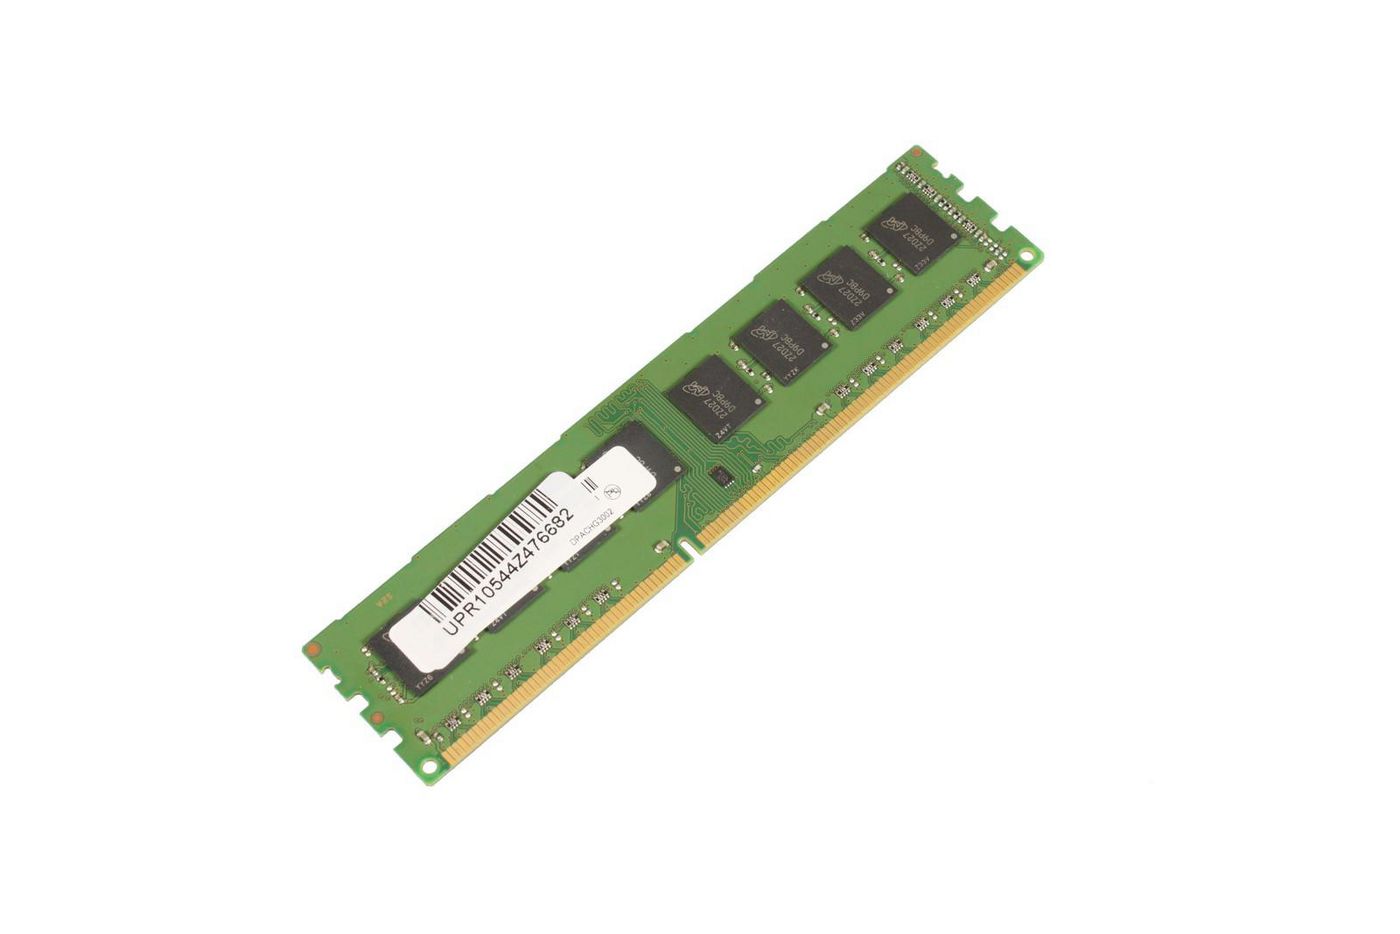 MICROMEMORY 8GB Module for Dell